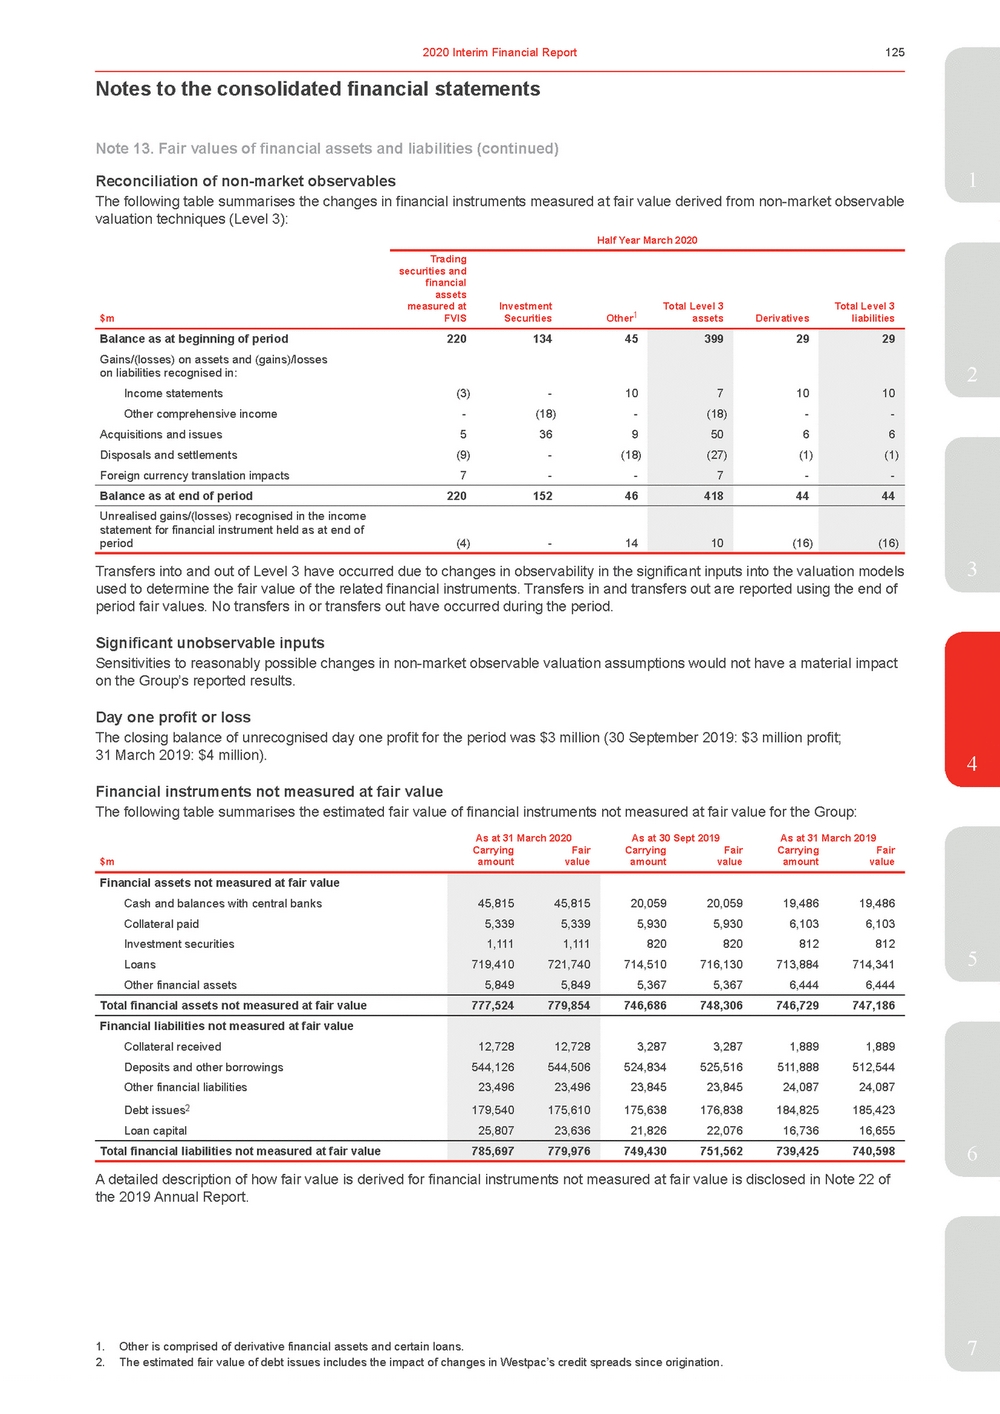 11676-3-ex1_westpac 2020 interim financial results announcement_page_130.jpg